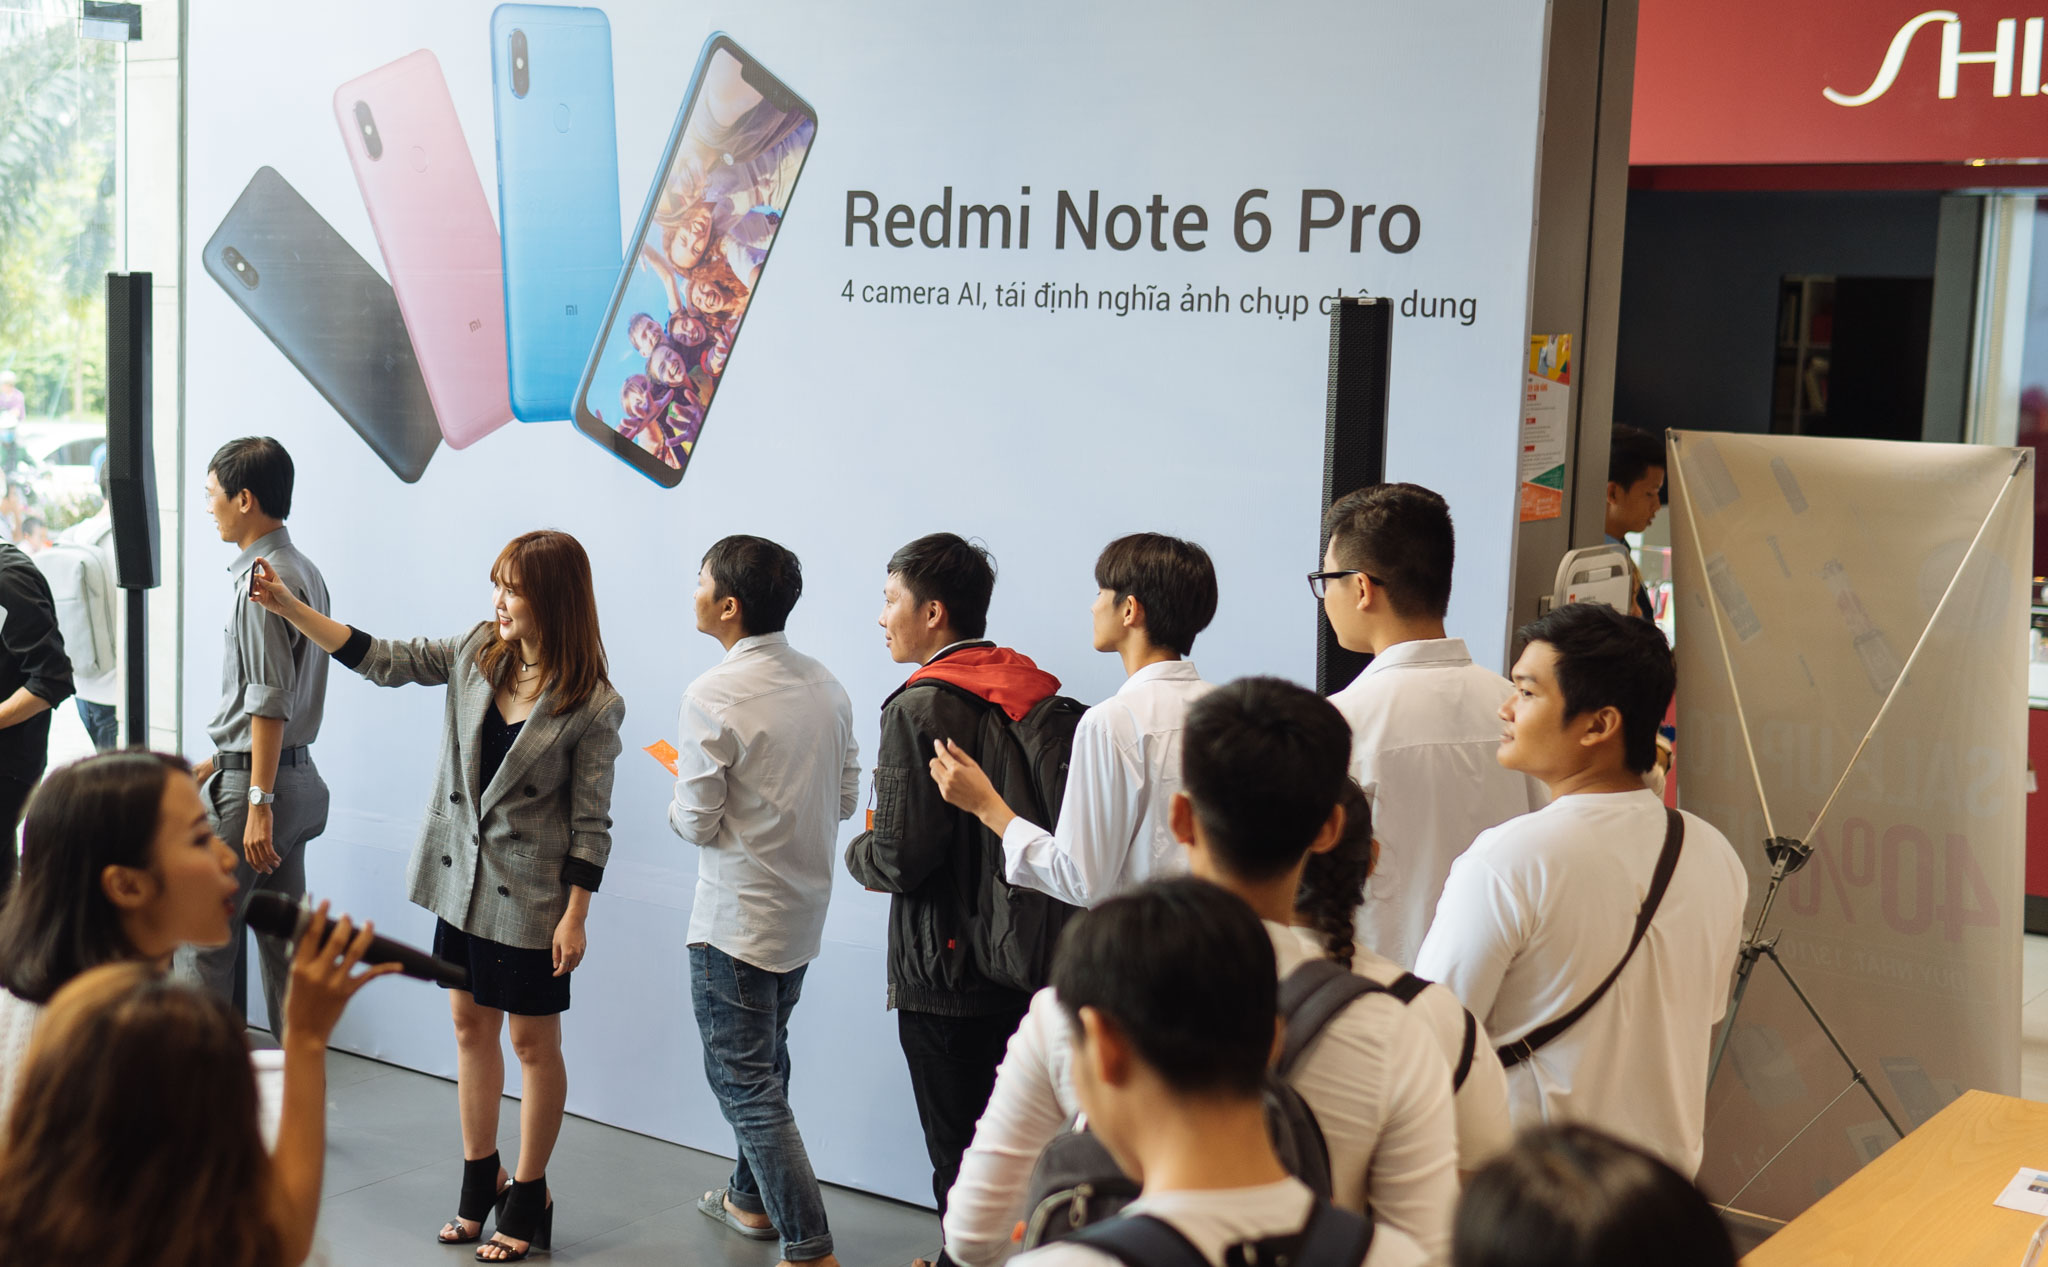 Ribi Sachi lập kỷ lục selfie 133 tấm trong vòng 3 phút với smartphone Redmi Note 6 Pro